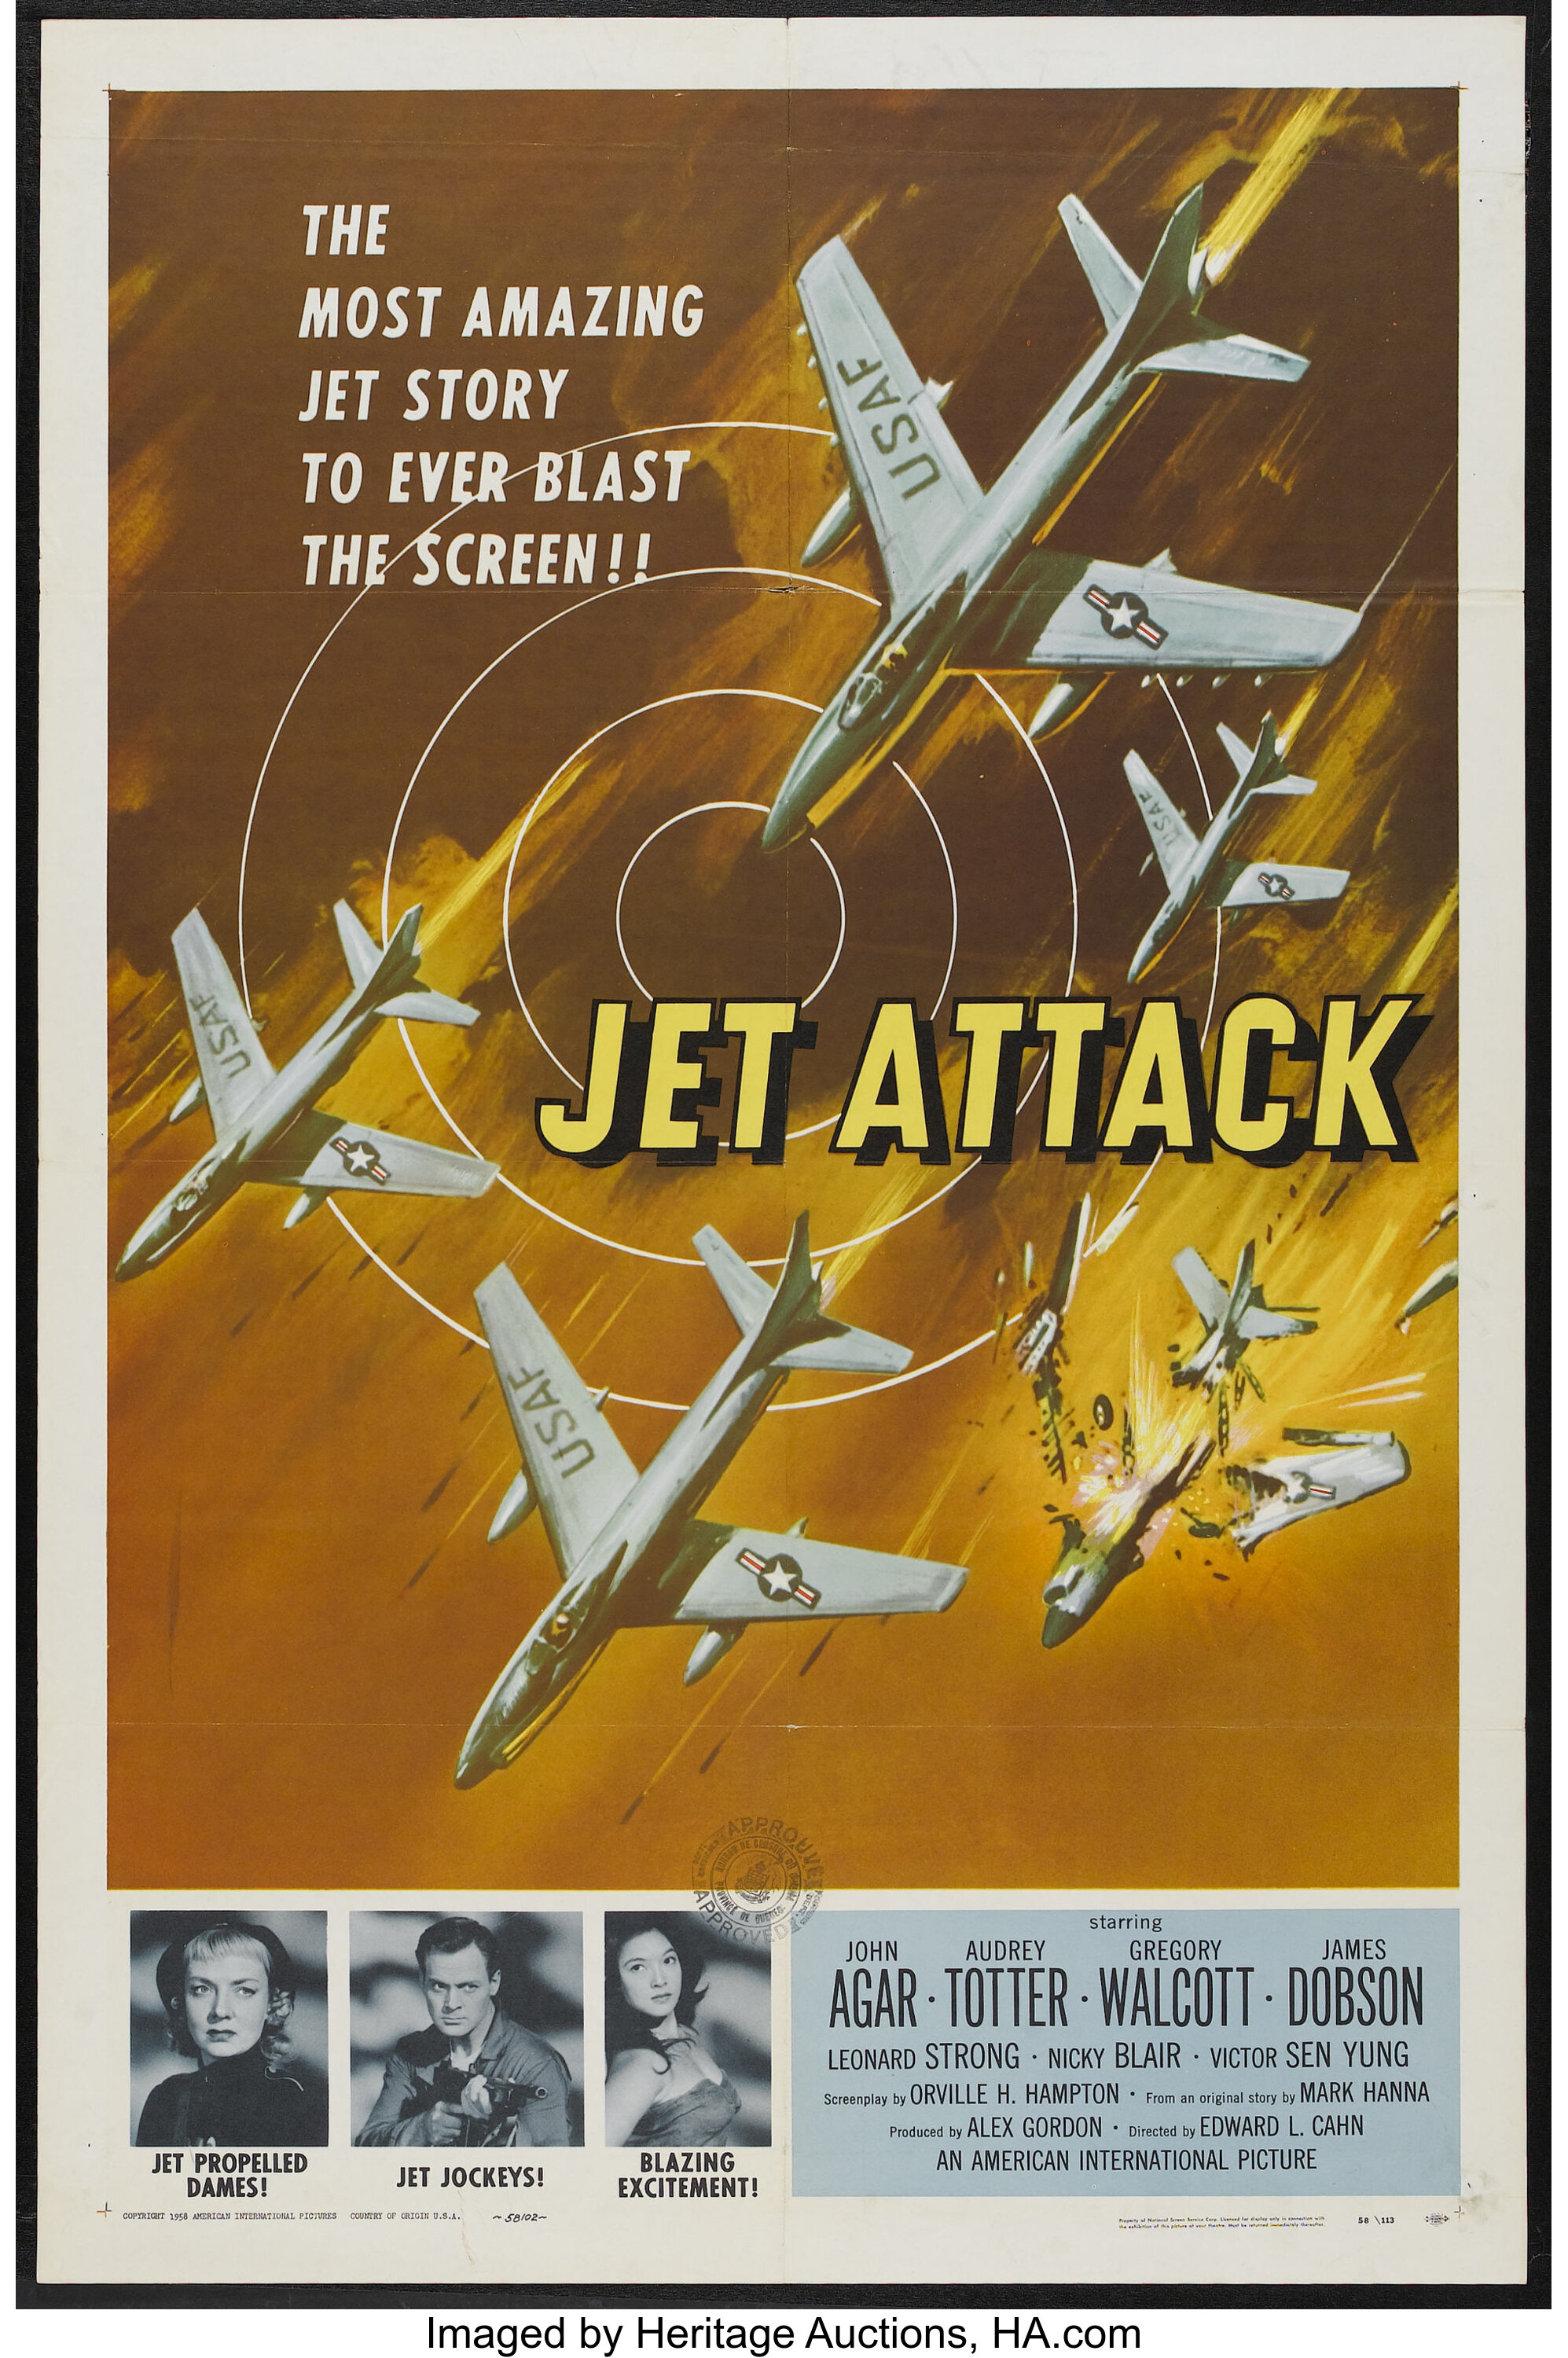 Jet attack move. Attack Jet. Джет атака.